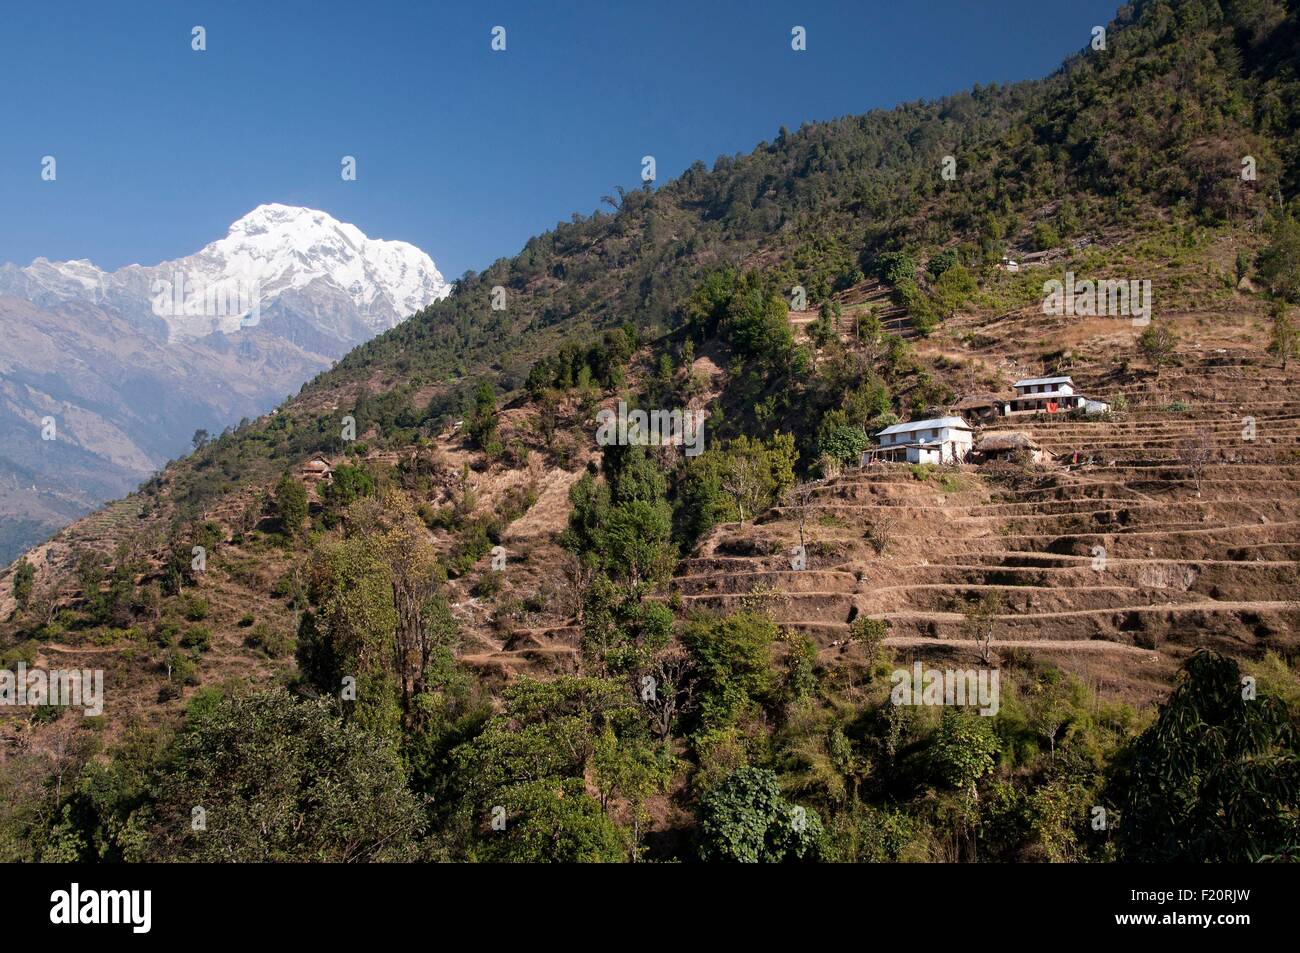 Nepal, Gandaki, Annapurna region, Nepalese houses on the mountain between Landruk and Tolka villages, Annapurna South in the background Stock Photo